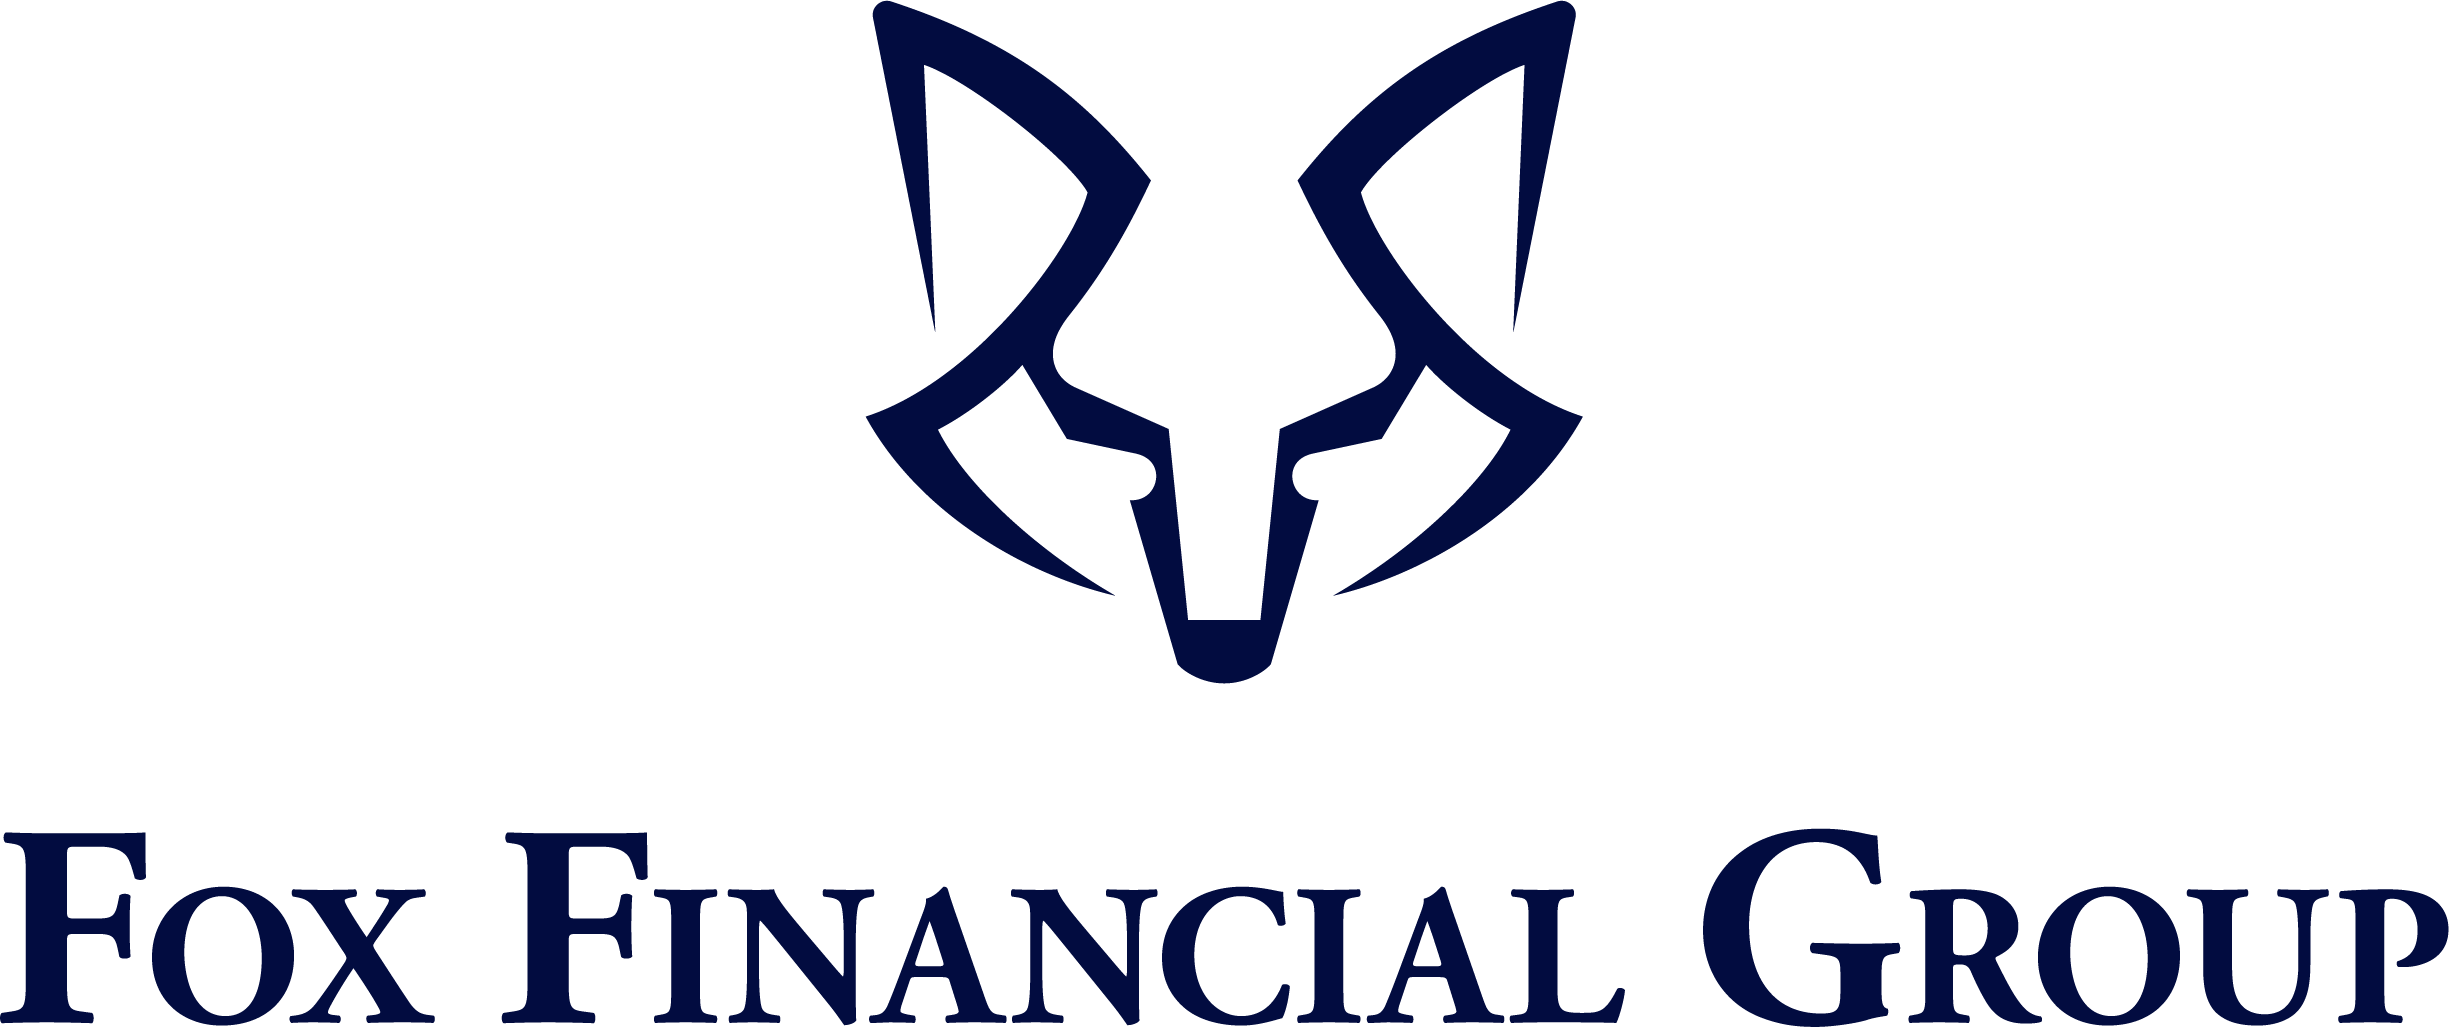 Fox Financial - blue logo